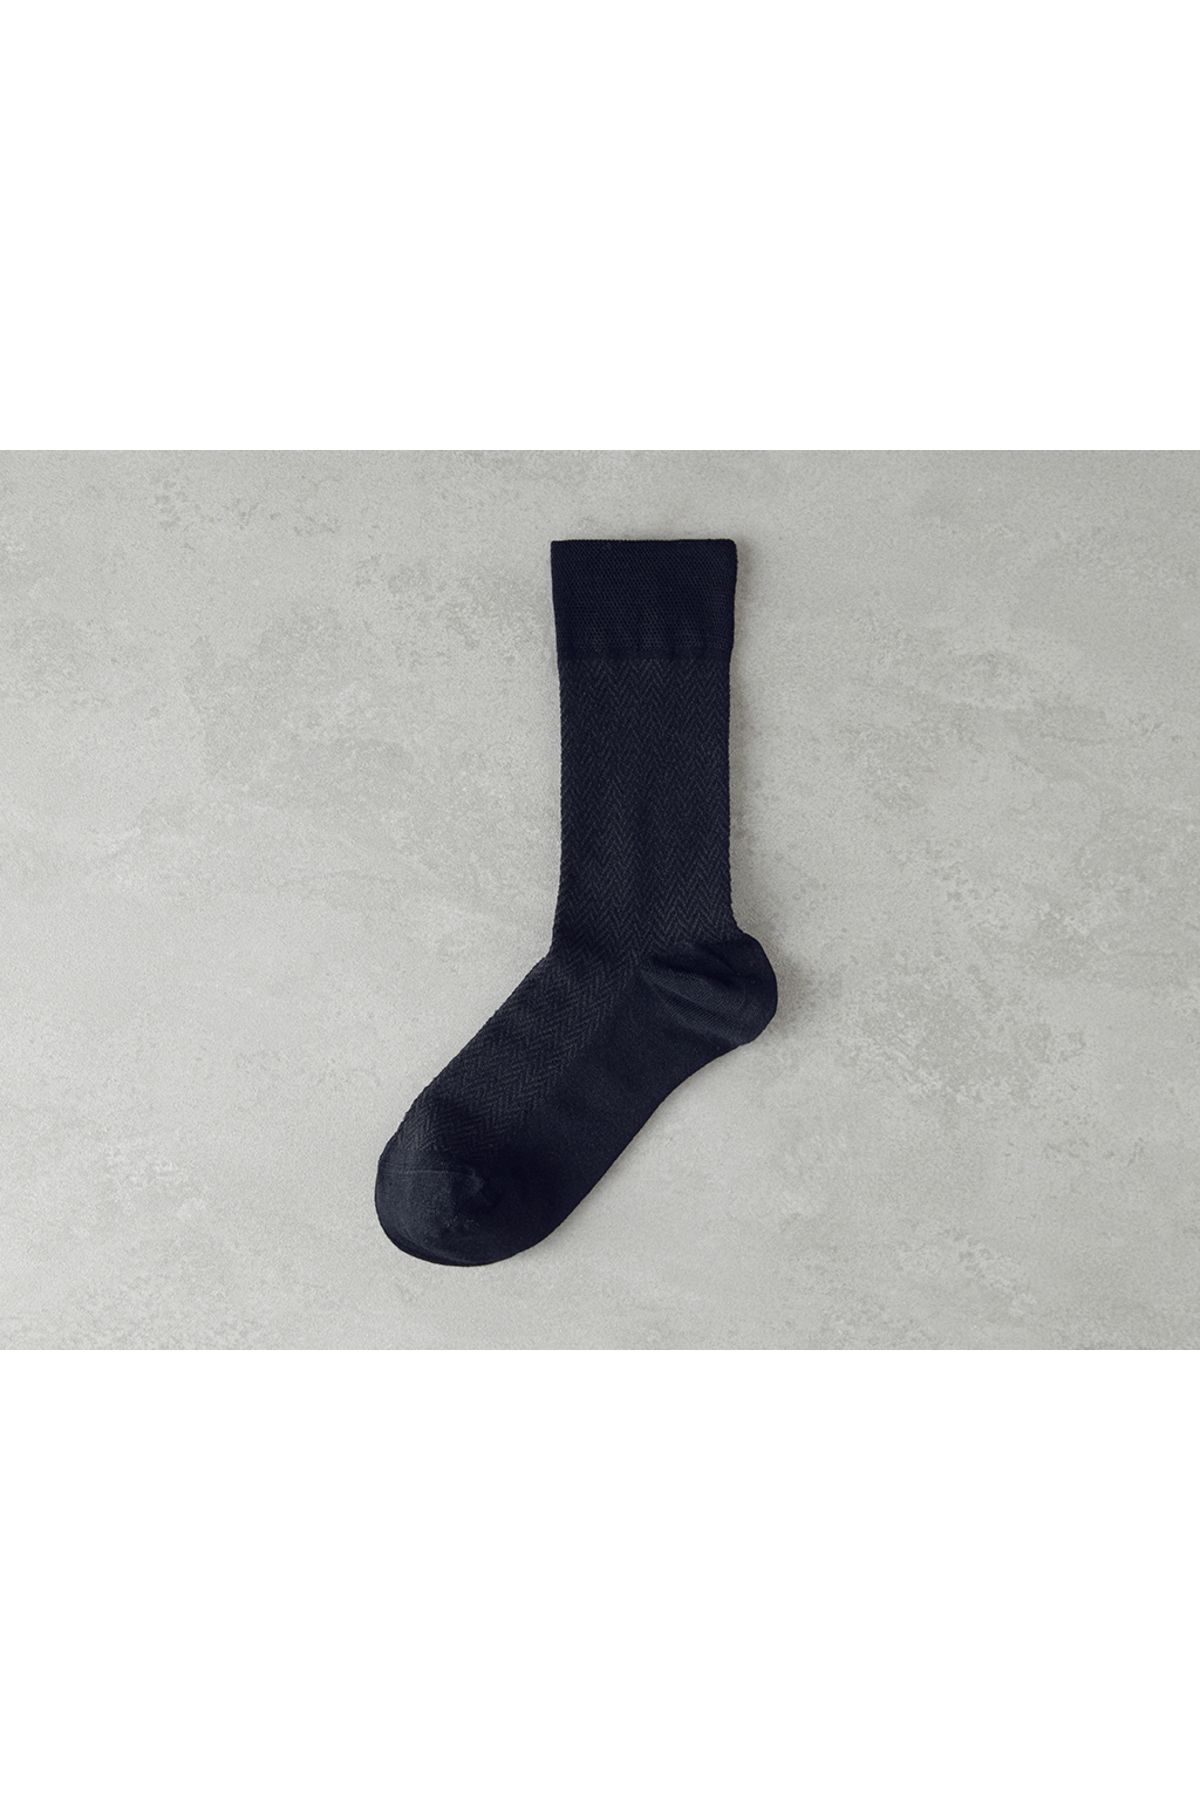 English Home Aksel Erkek Soket Çorap - Siyah